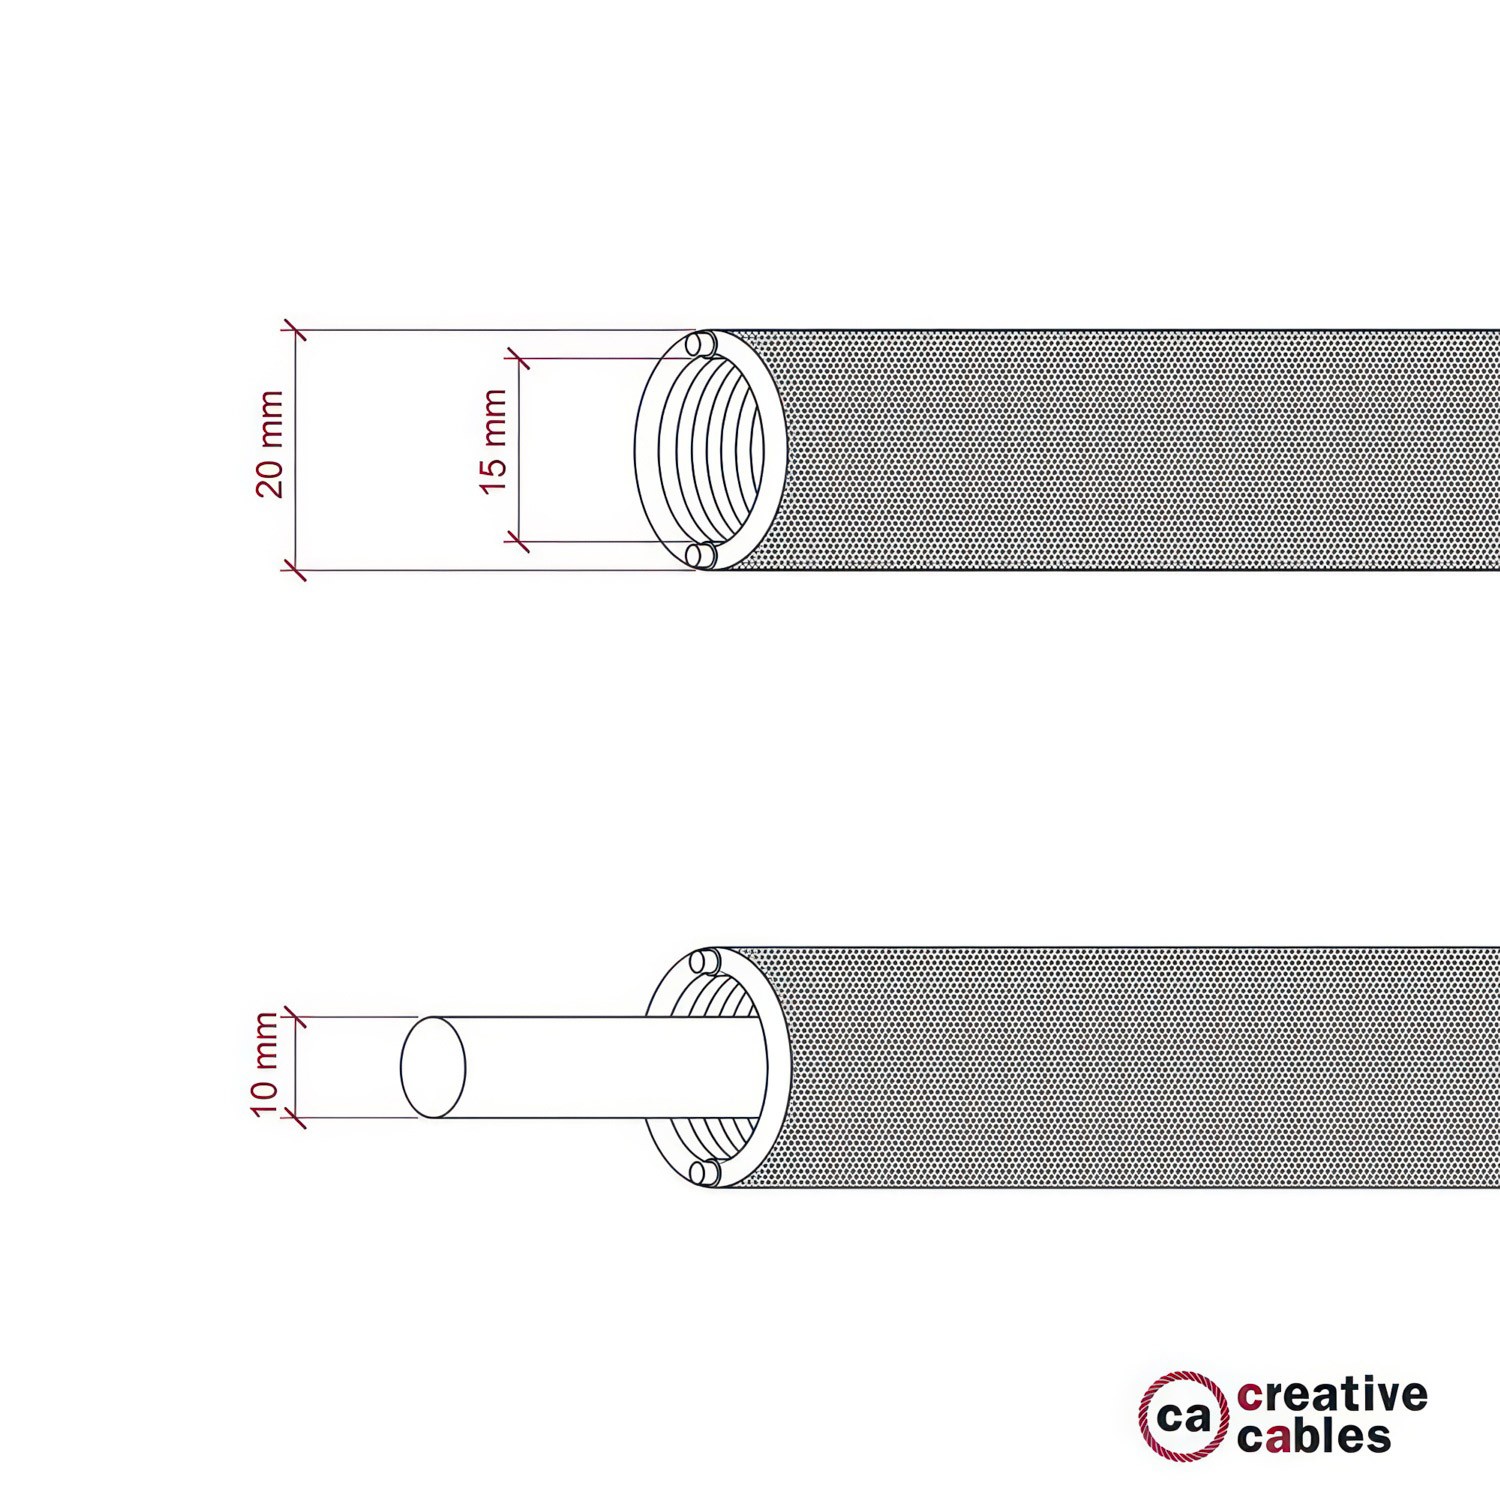 Creative-Tube fleksibelt rør, Rayon White RM01 stofbeklædning, diameter 20 mm